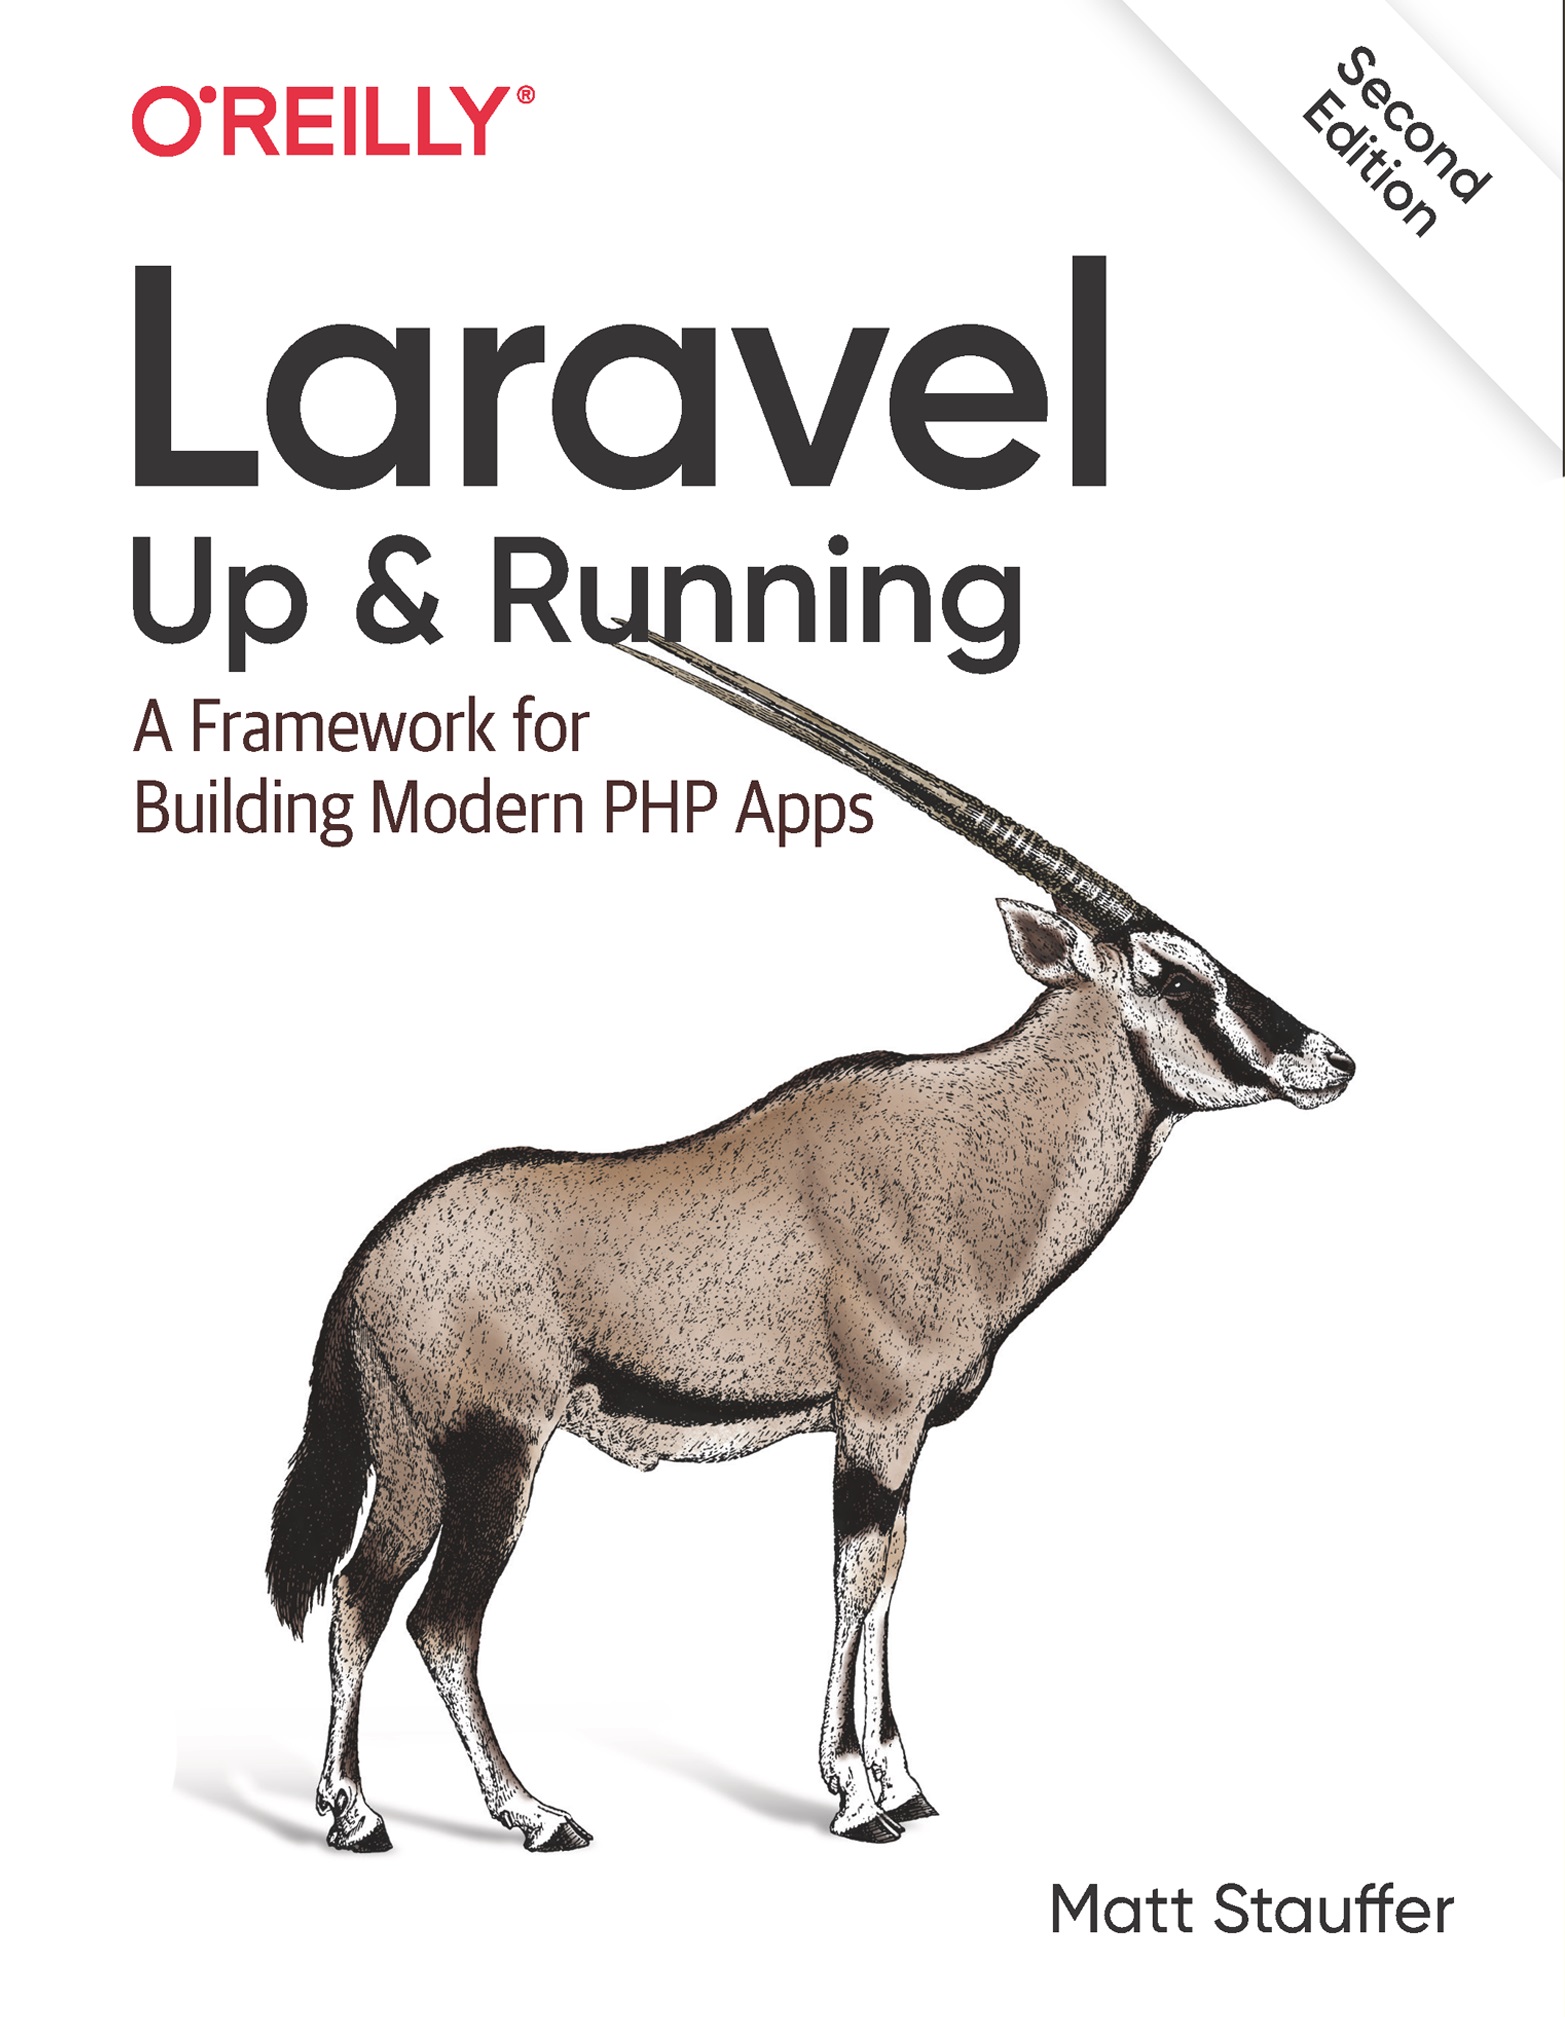 Laravel: Up& Running: A Framework for Building Modern PHP Apps